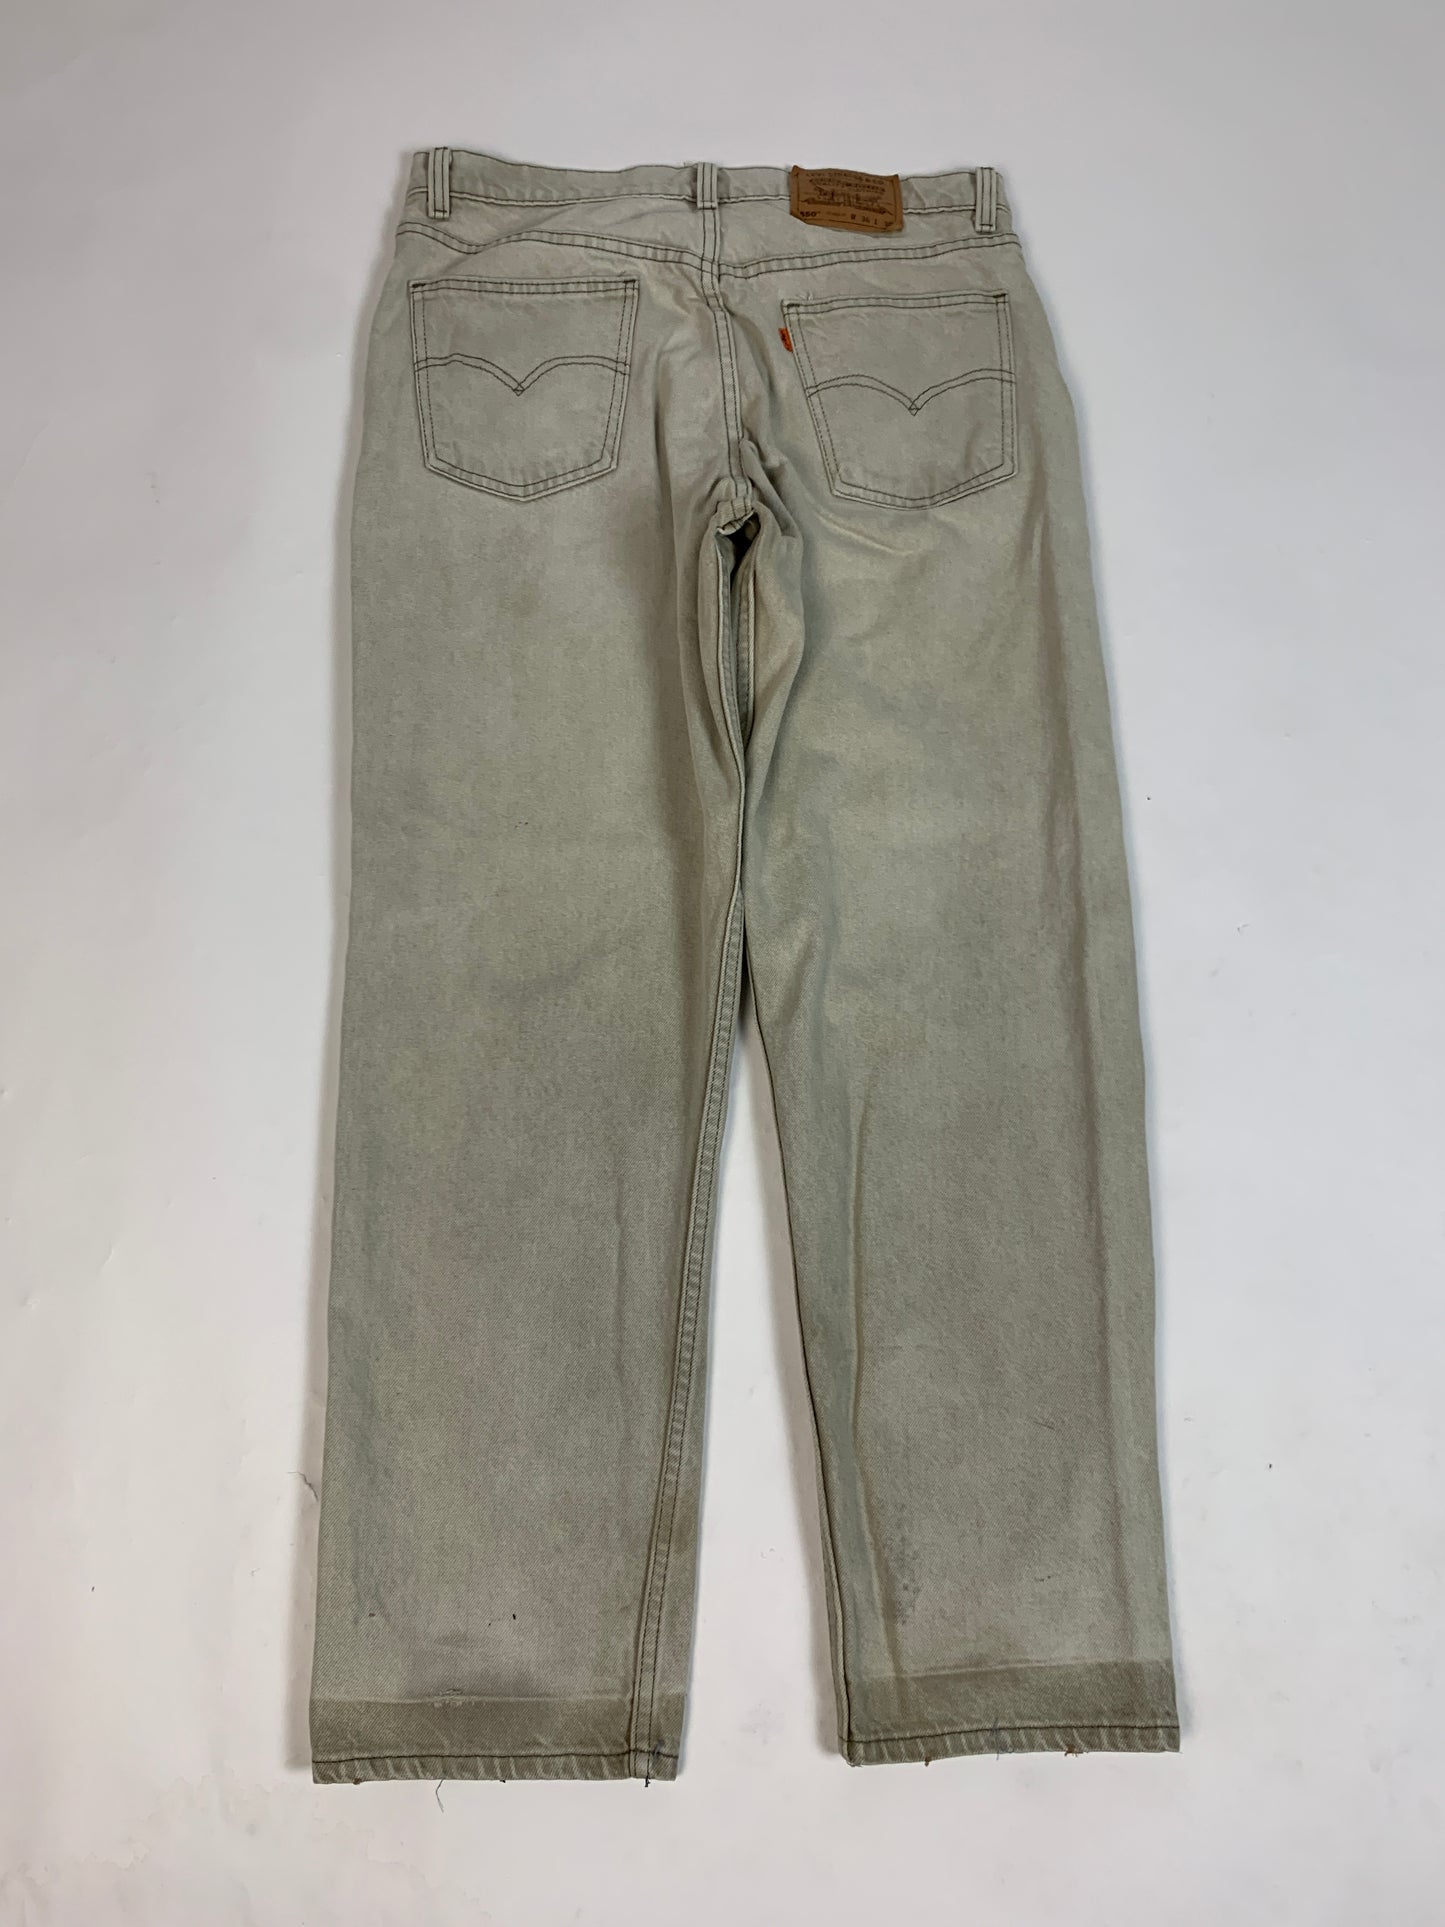 Levis Oranger Tab Vintage Jeans - 32